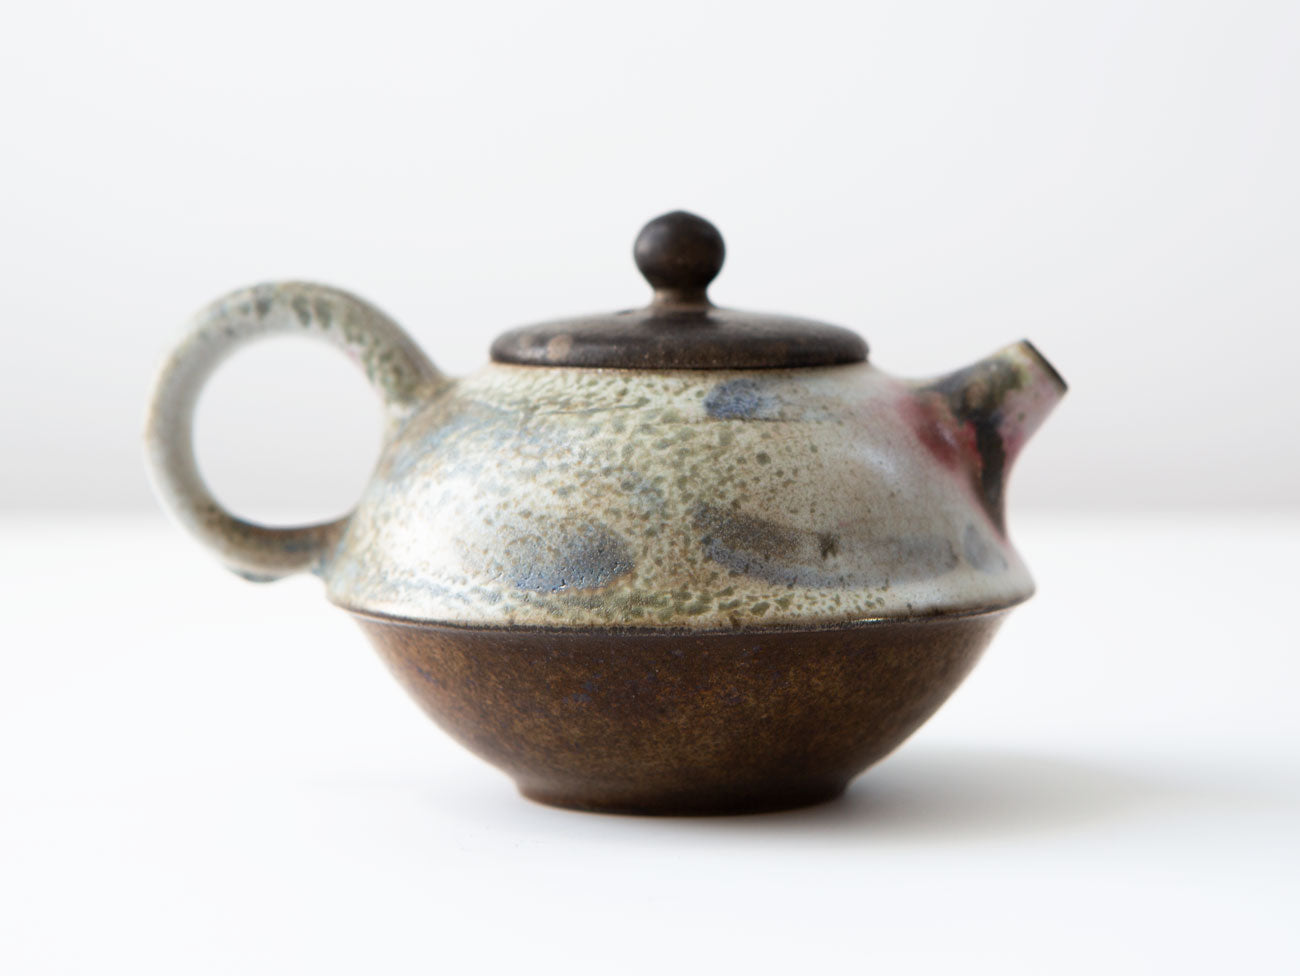 North Star. Wood-fired glazed tea pot. Liao Guo Hua.